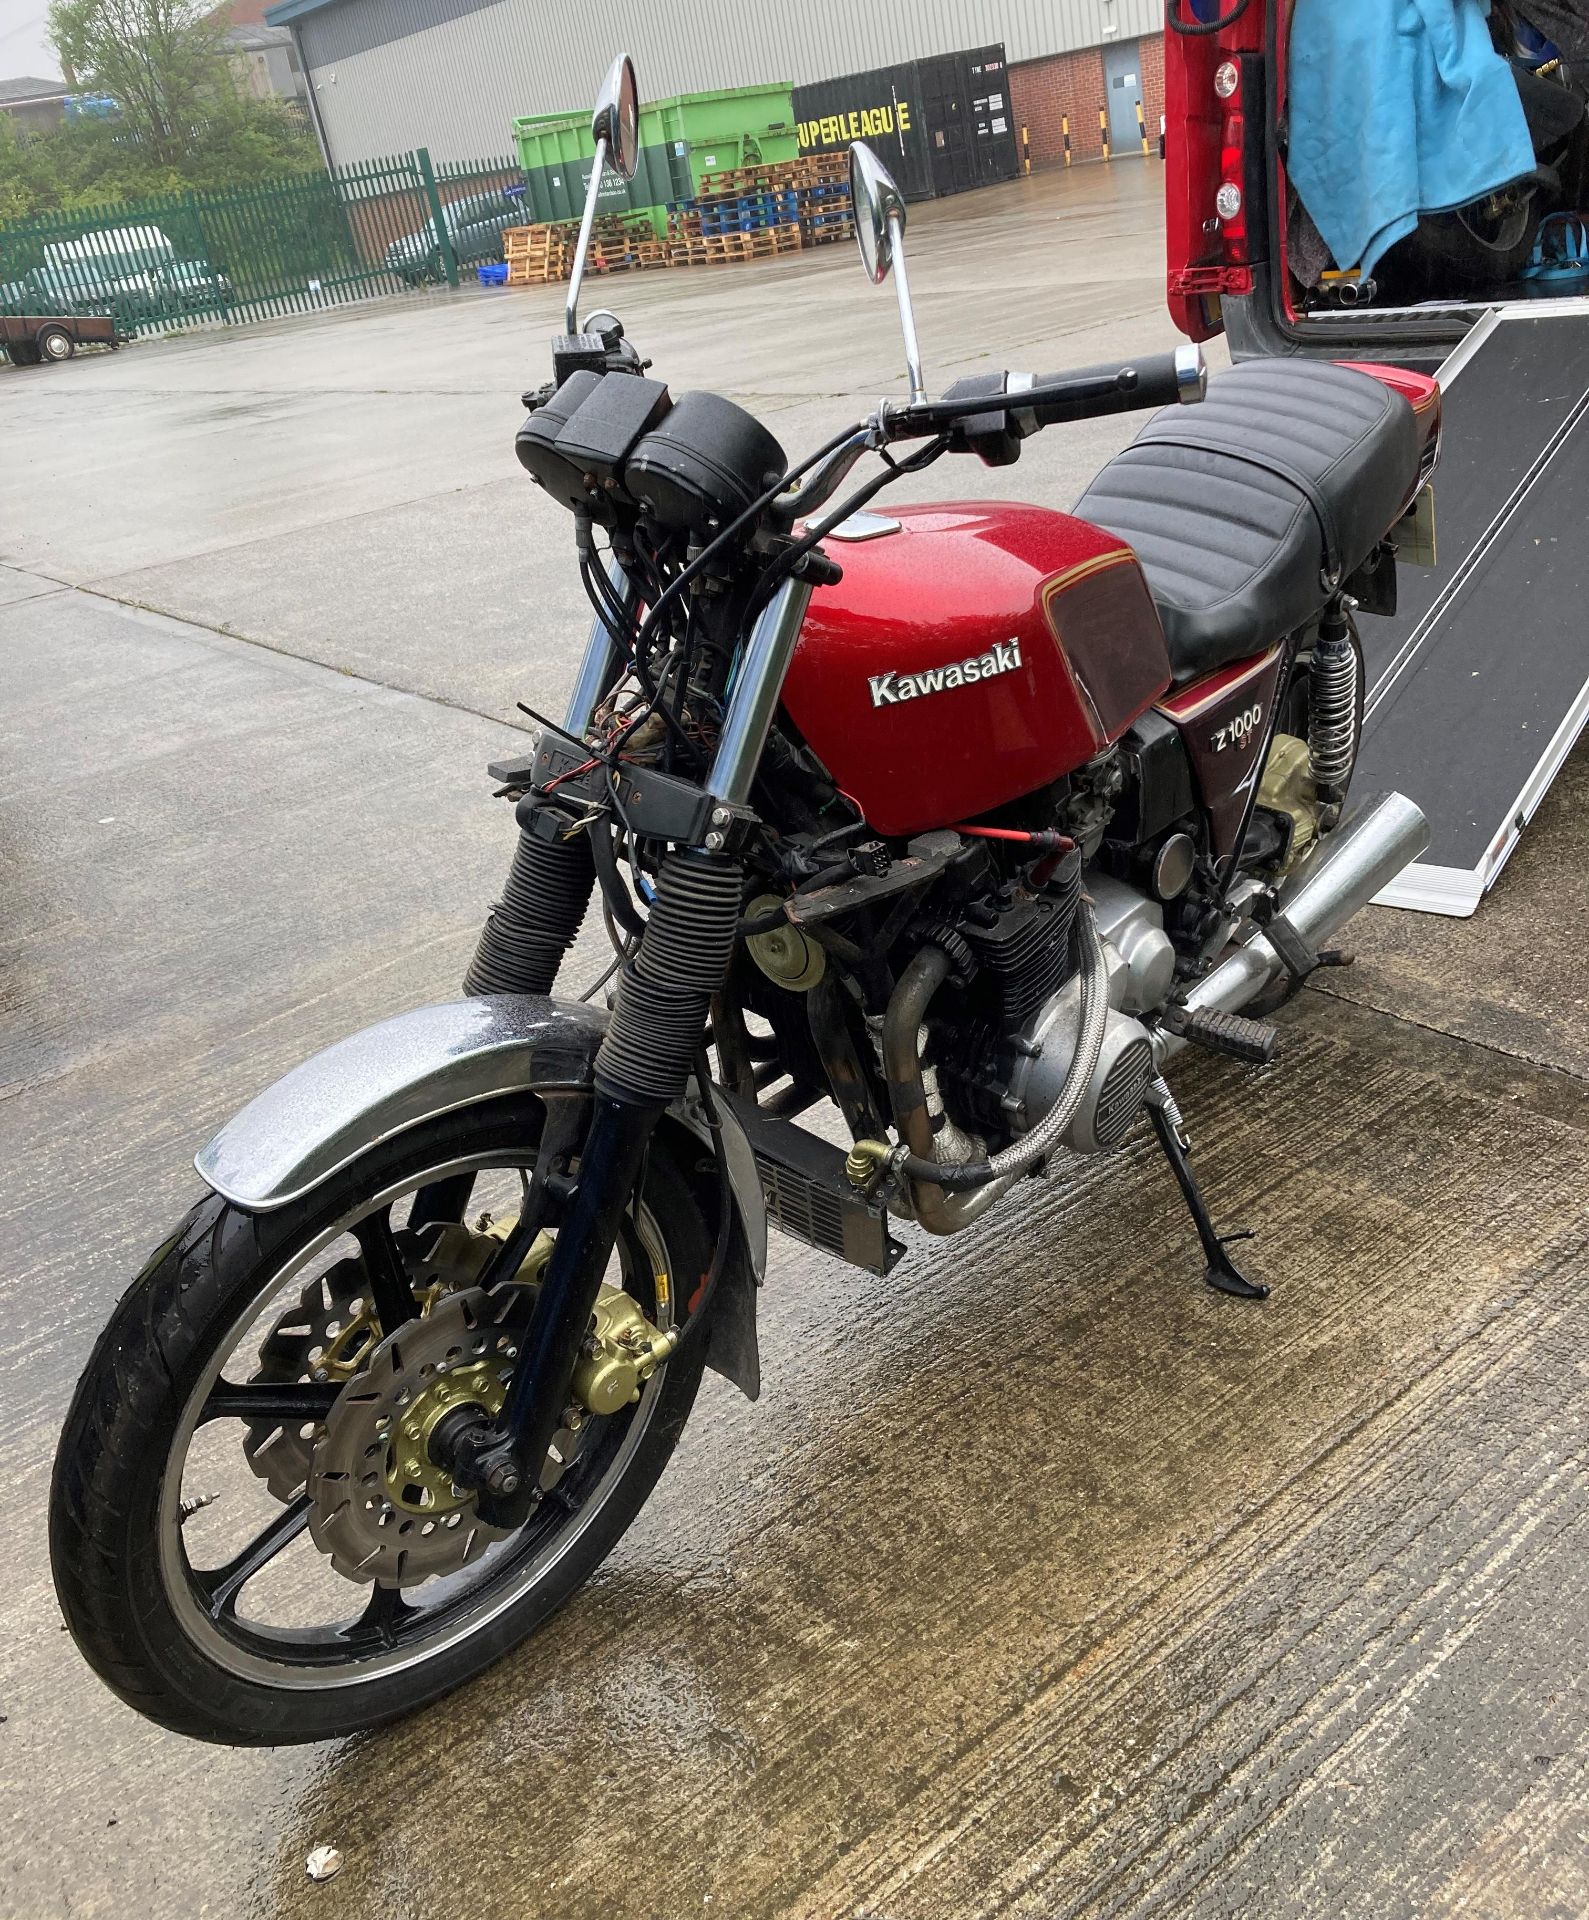 KAWASAKI 1015cc MOTORCYCLE - Petrol - Red. Sold as a project restoration/spares/repairs.